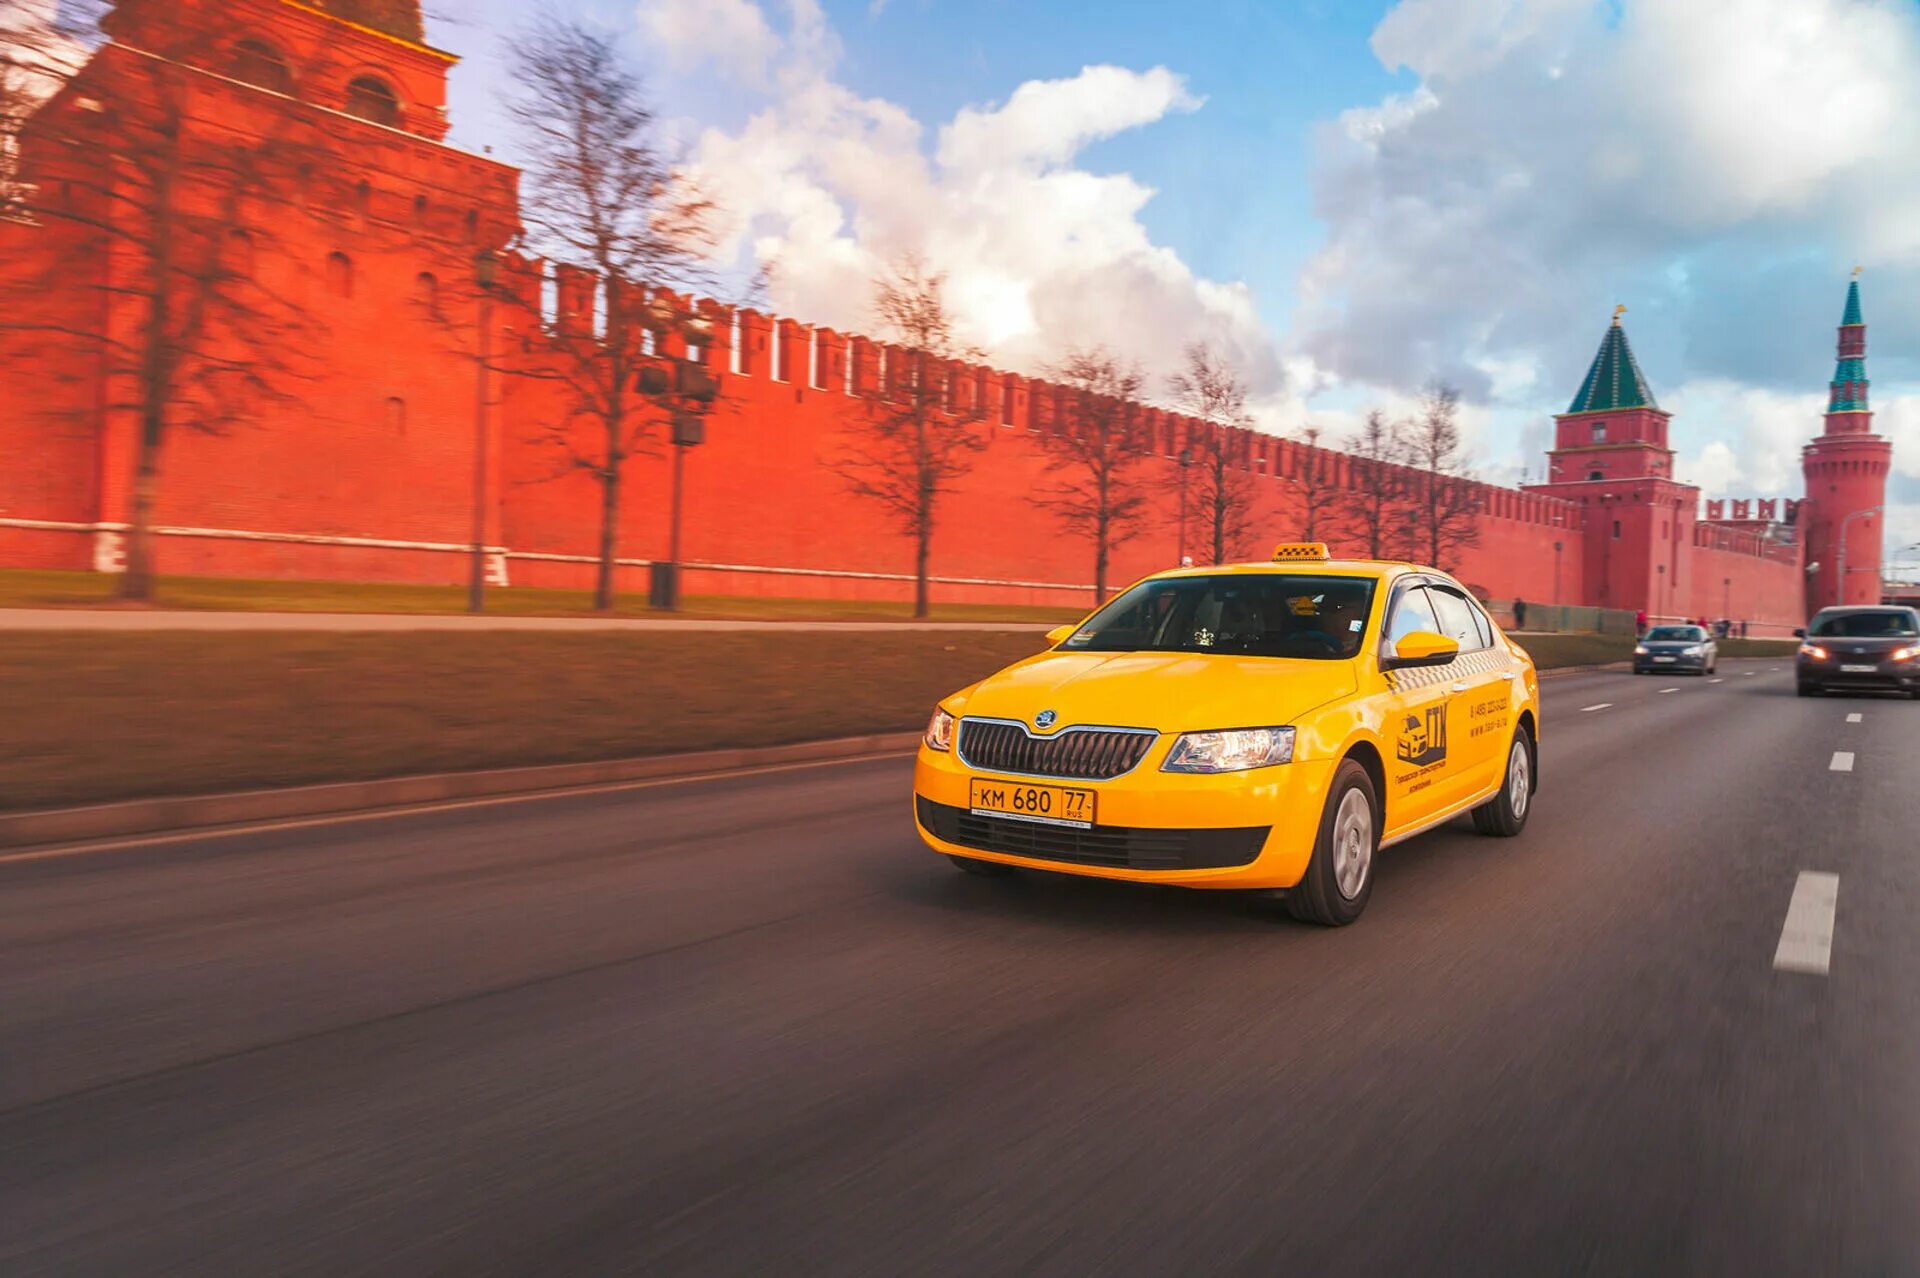 Такси мгу. Машина "такси". Автомобиль «такси». Таха машина. Желтое такси.